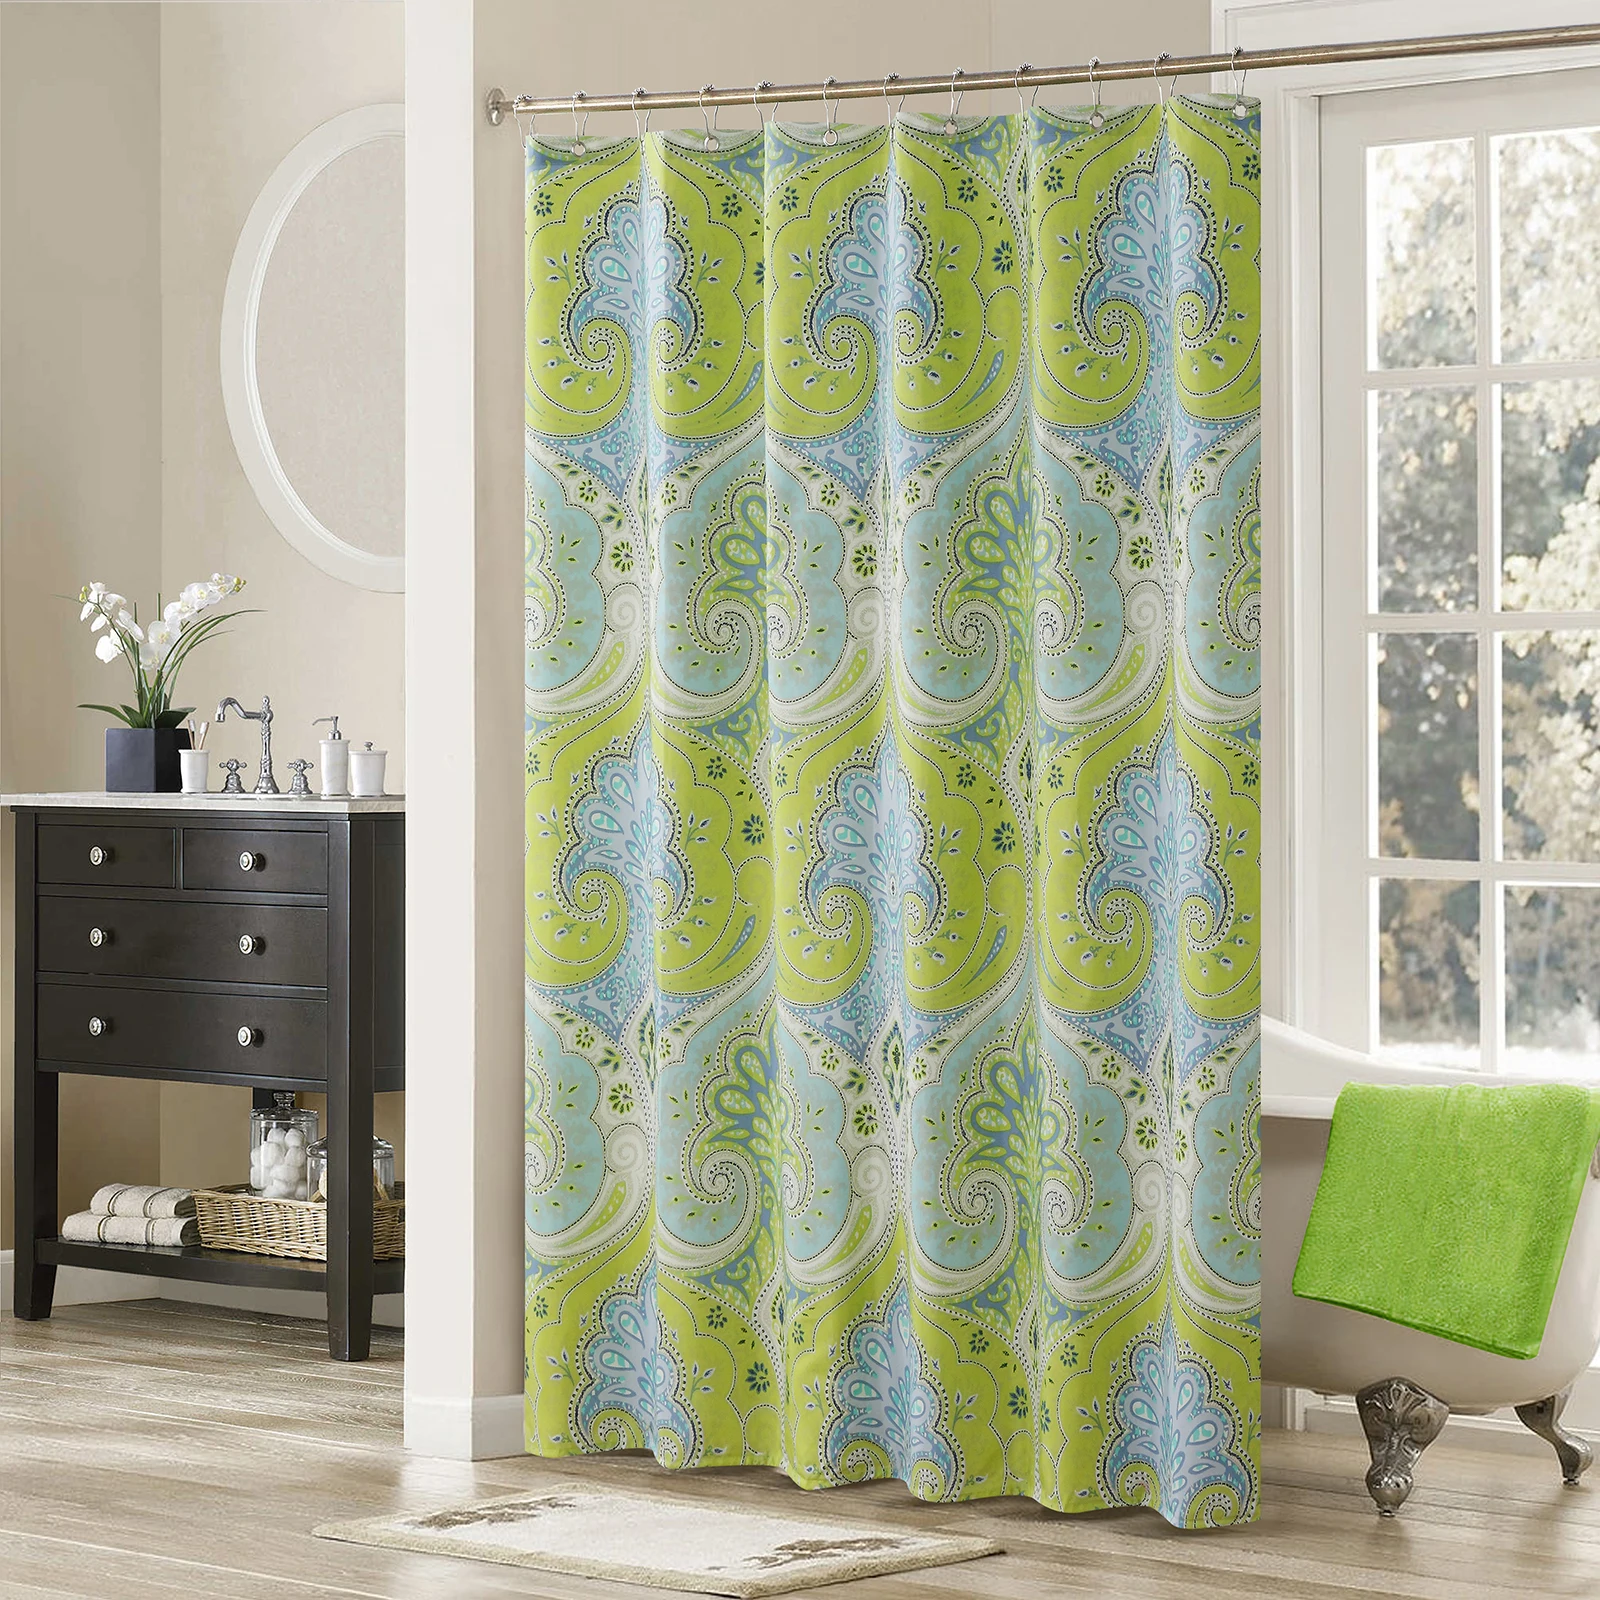 Jaipur Blue Paisley Polyester Waterproof Printed Bright Fabric Fresh Decoratived Modern Green Shower Curtain комплект постельного белья двуспальный melograno paisley blue